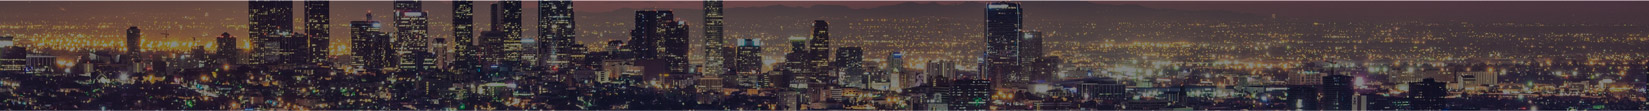 Los Angeles Skyline at Night Banner Image